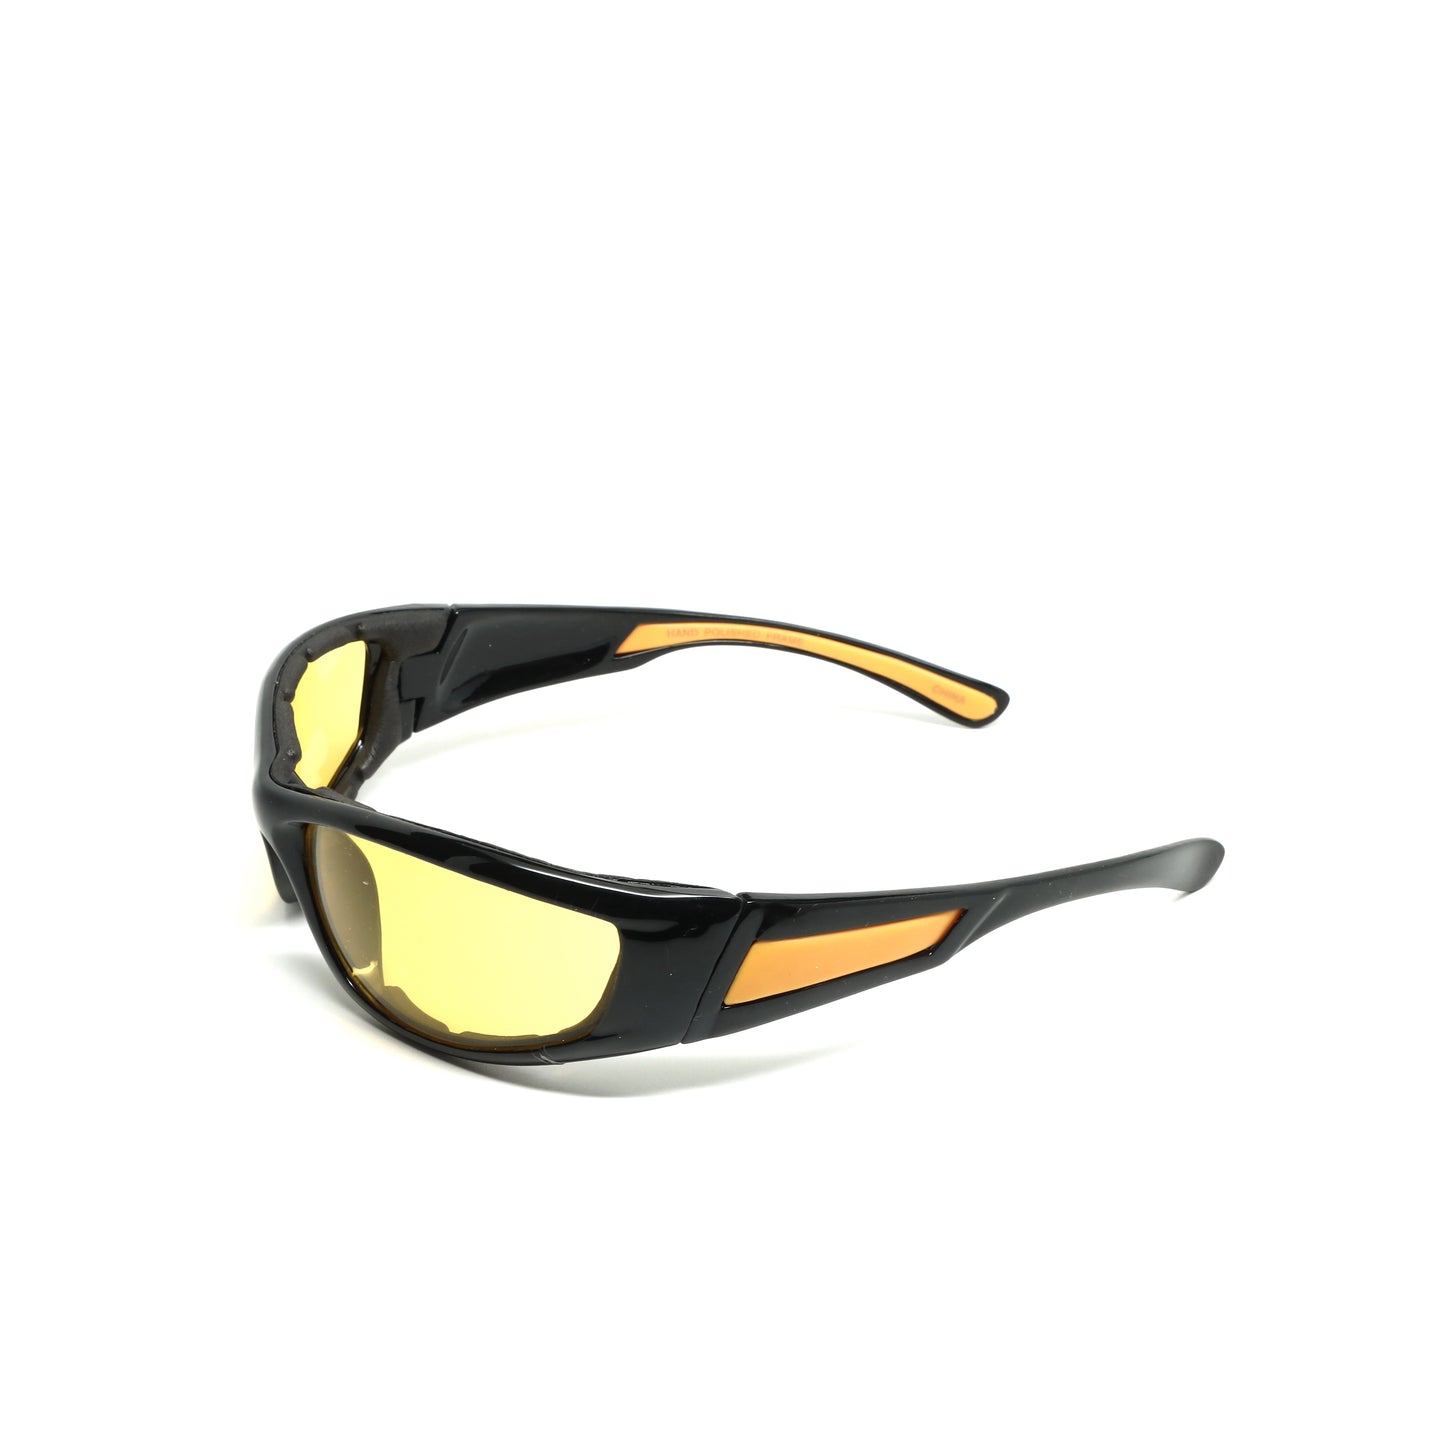 //Contender// Foam Lined Nightvision Oversized Visor Sunglasses - Yellow